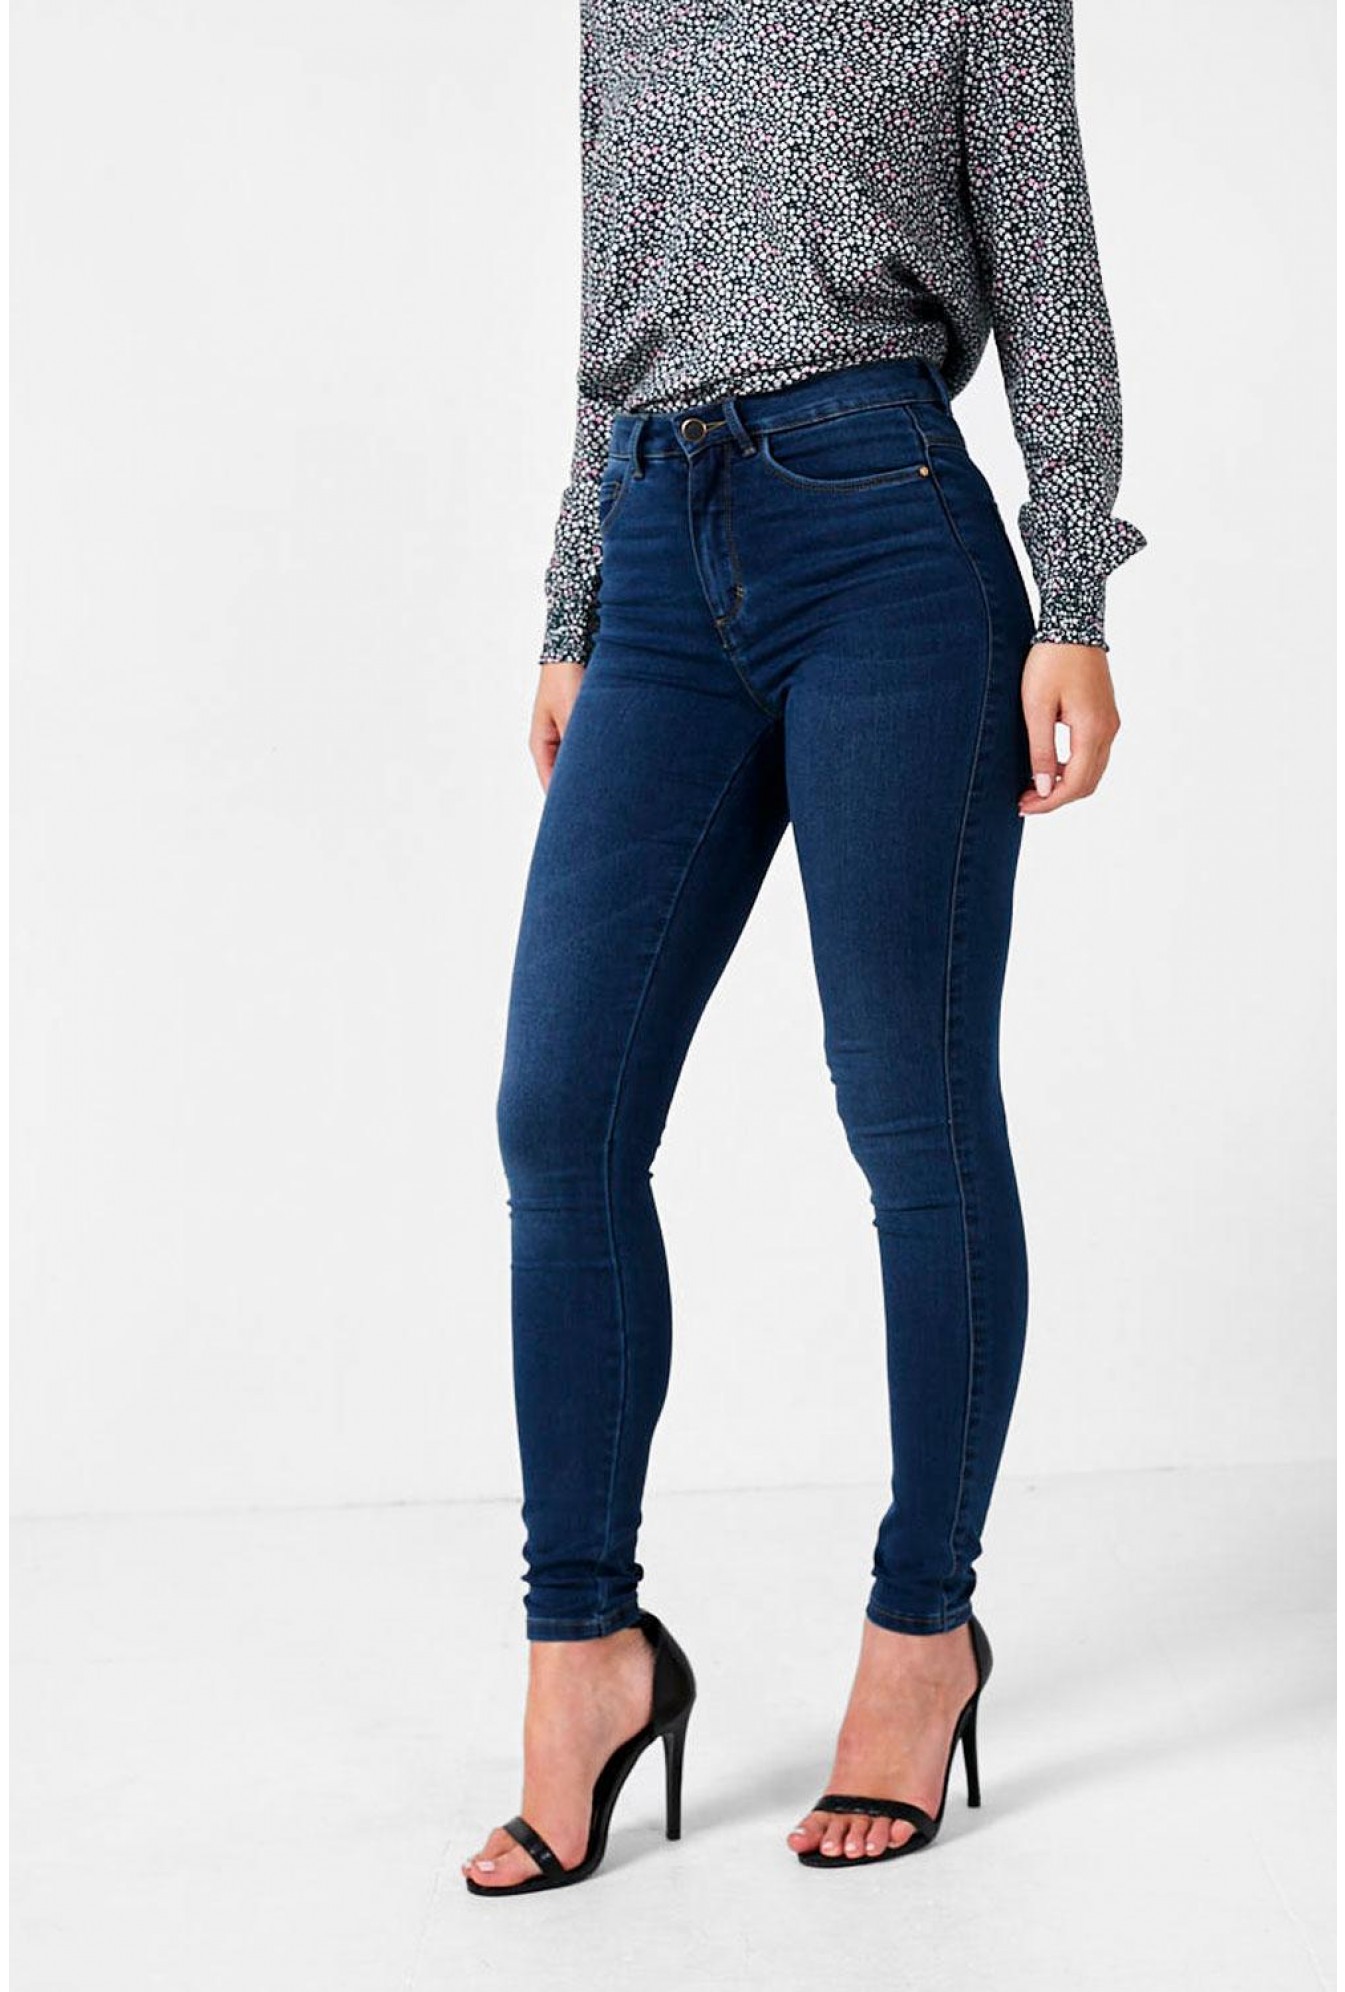 dark denim high waisted jeans